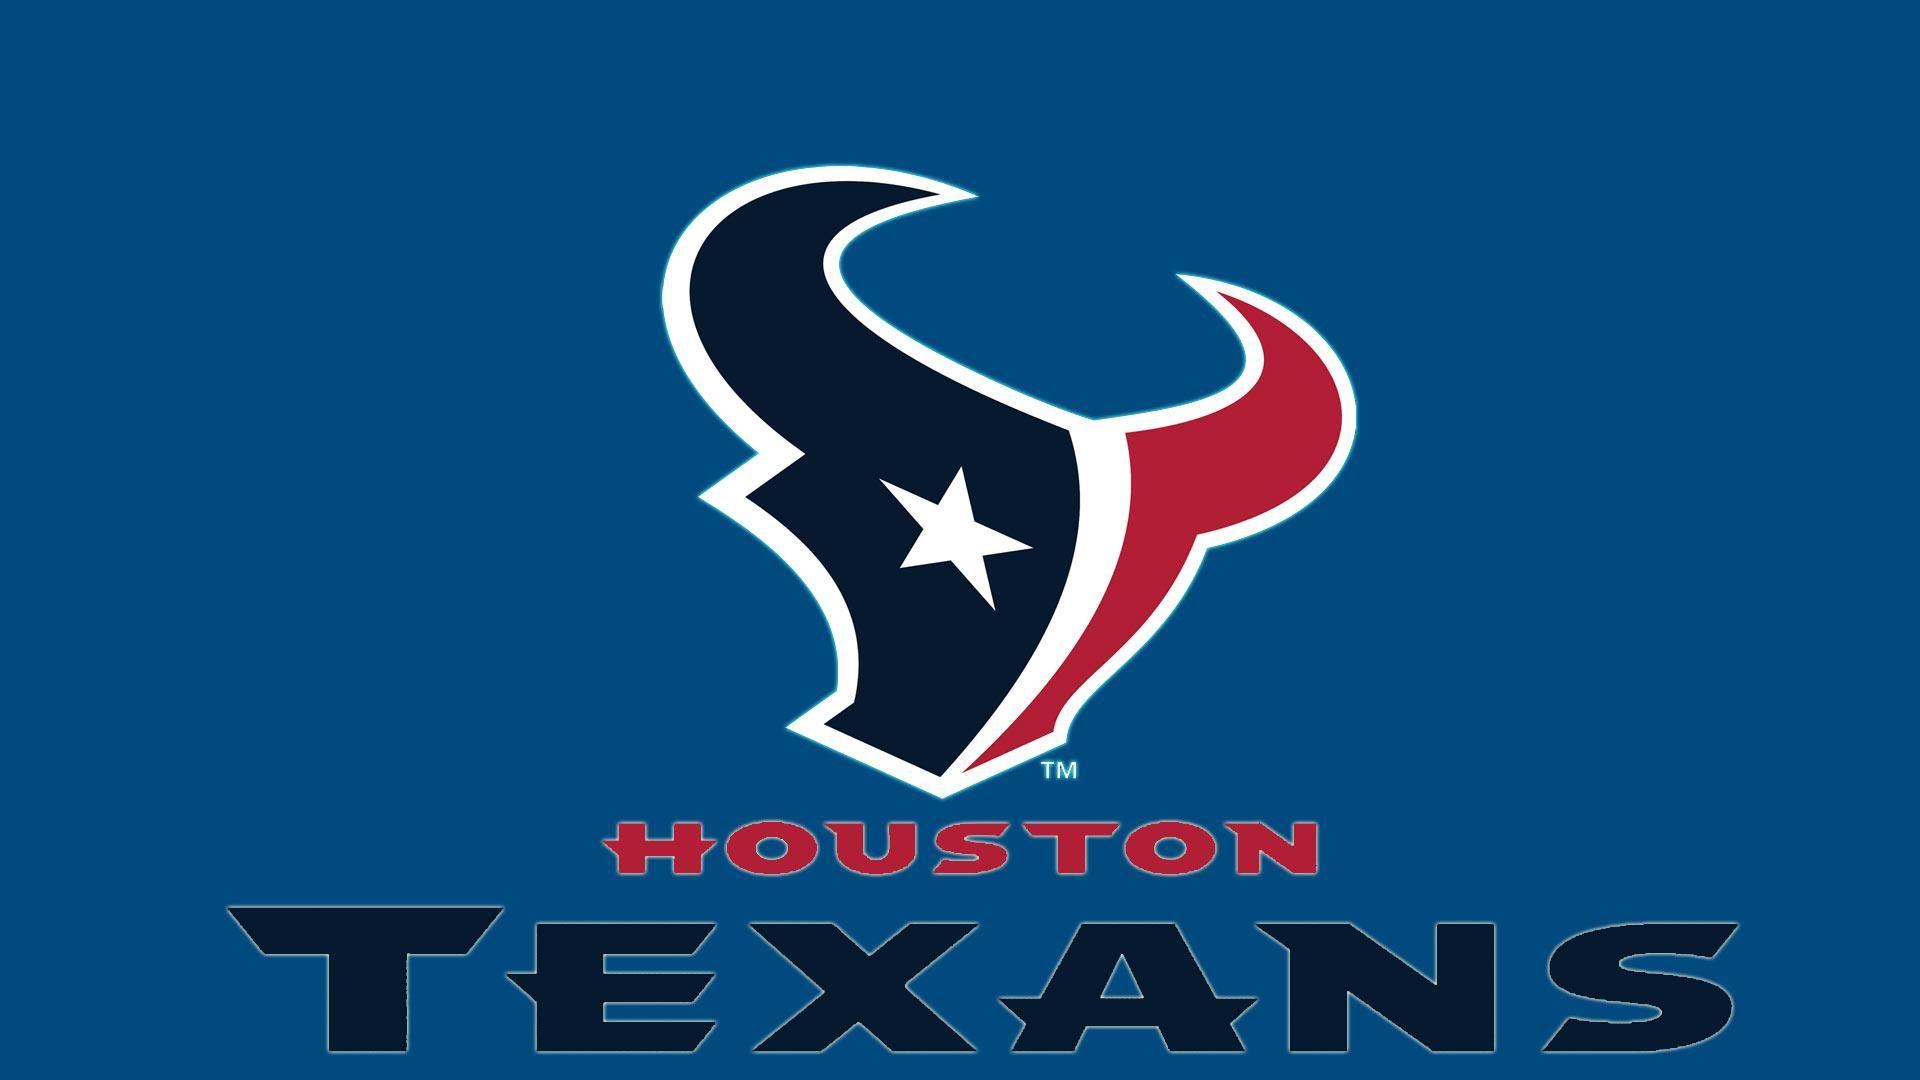 Houston Texans Logo Hd 1080p Wallpapers Screen Size 1920×1080